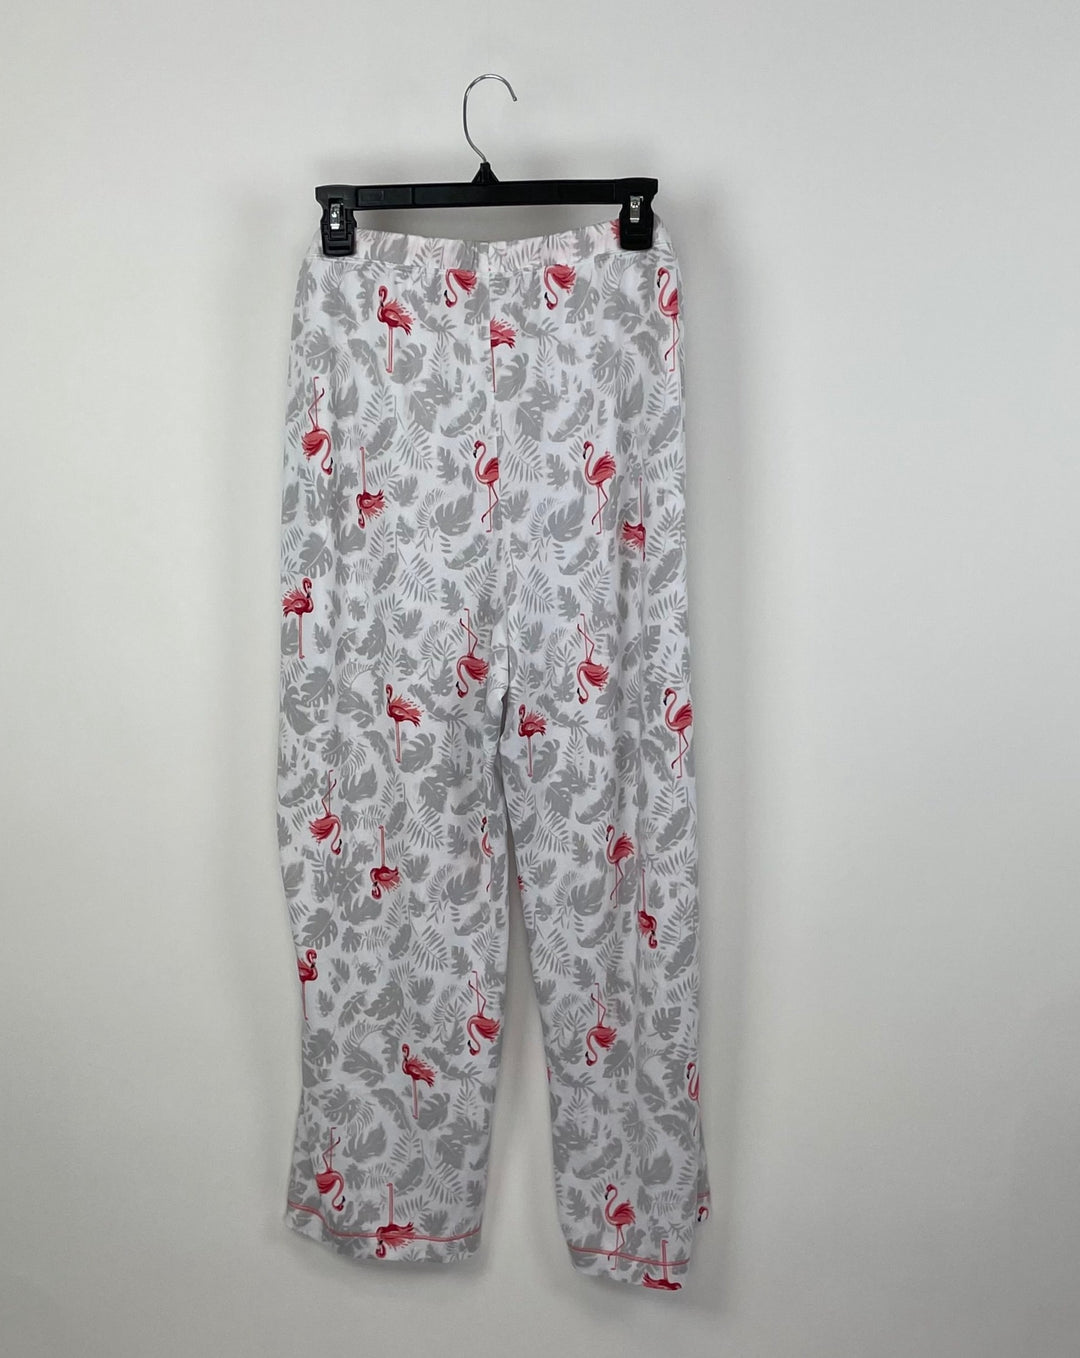 Flamingo Pajama Pants - 1X And 2X